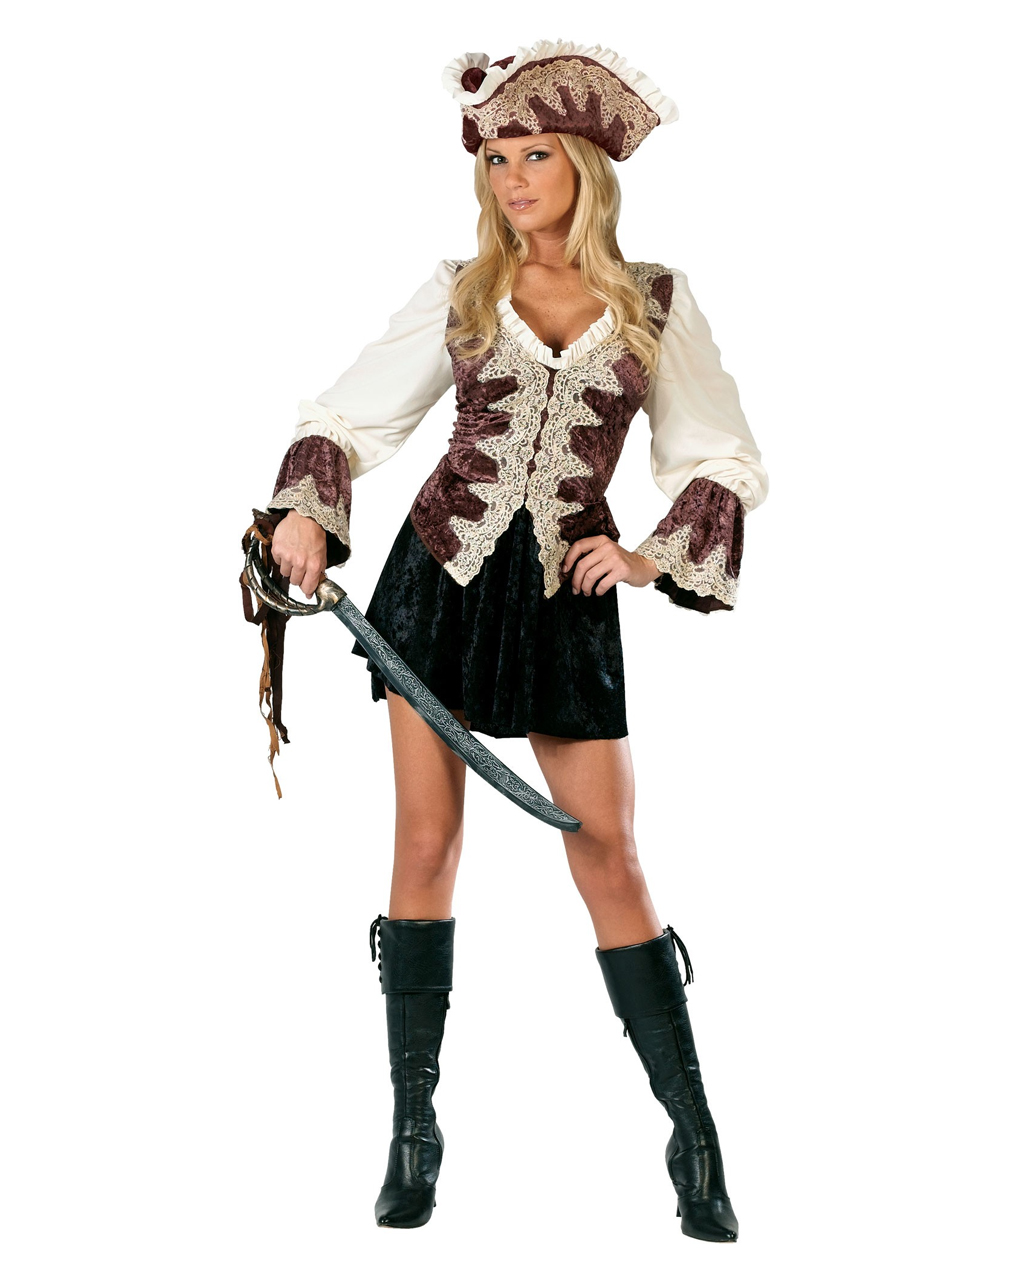 L Piratenbraut Piratin Deluxe Damen Kostüm Gr 42/44 Karneval Fasching #9113 